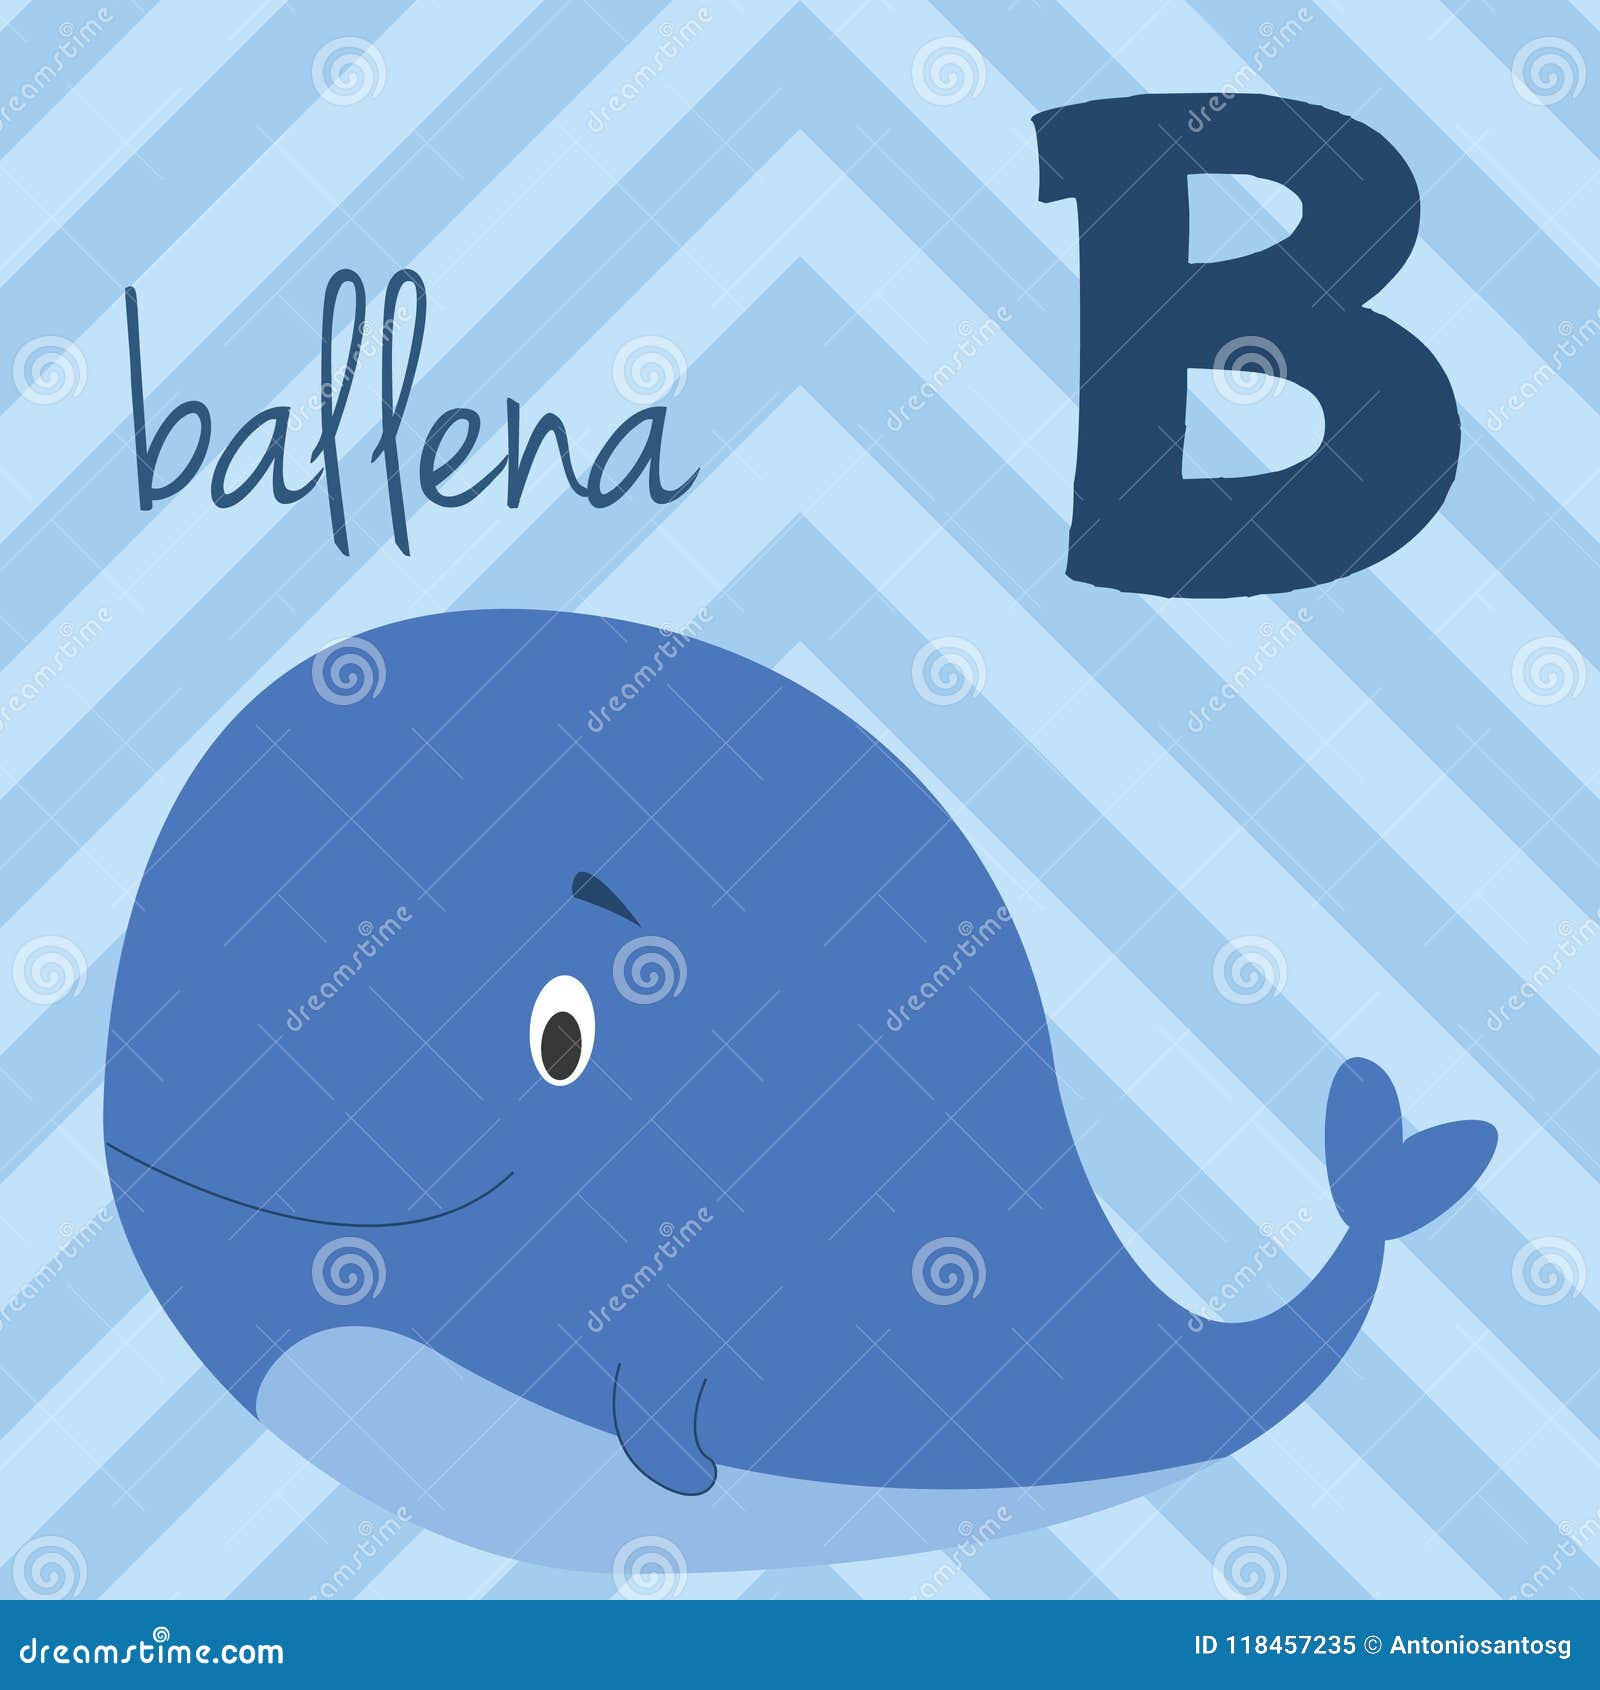 cute cartoon zoo illustrated alphabet with funny animals. spanish alphabet: b for ballena.